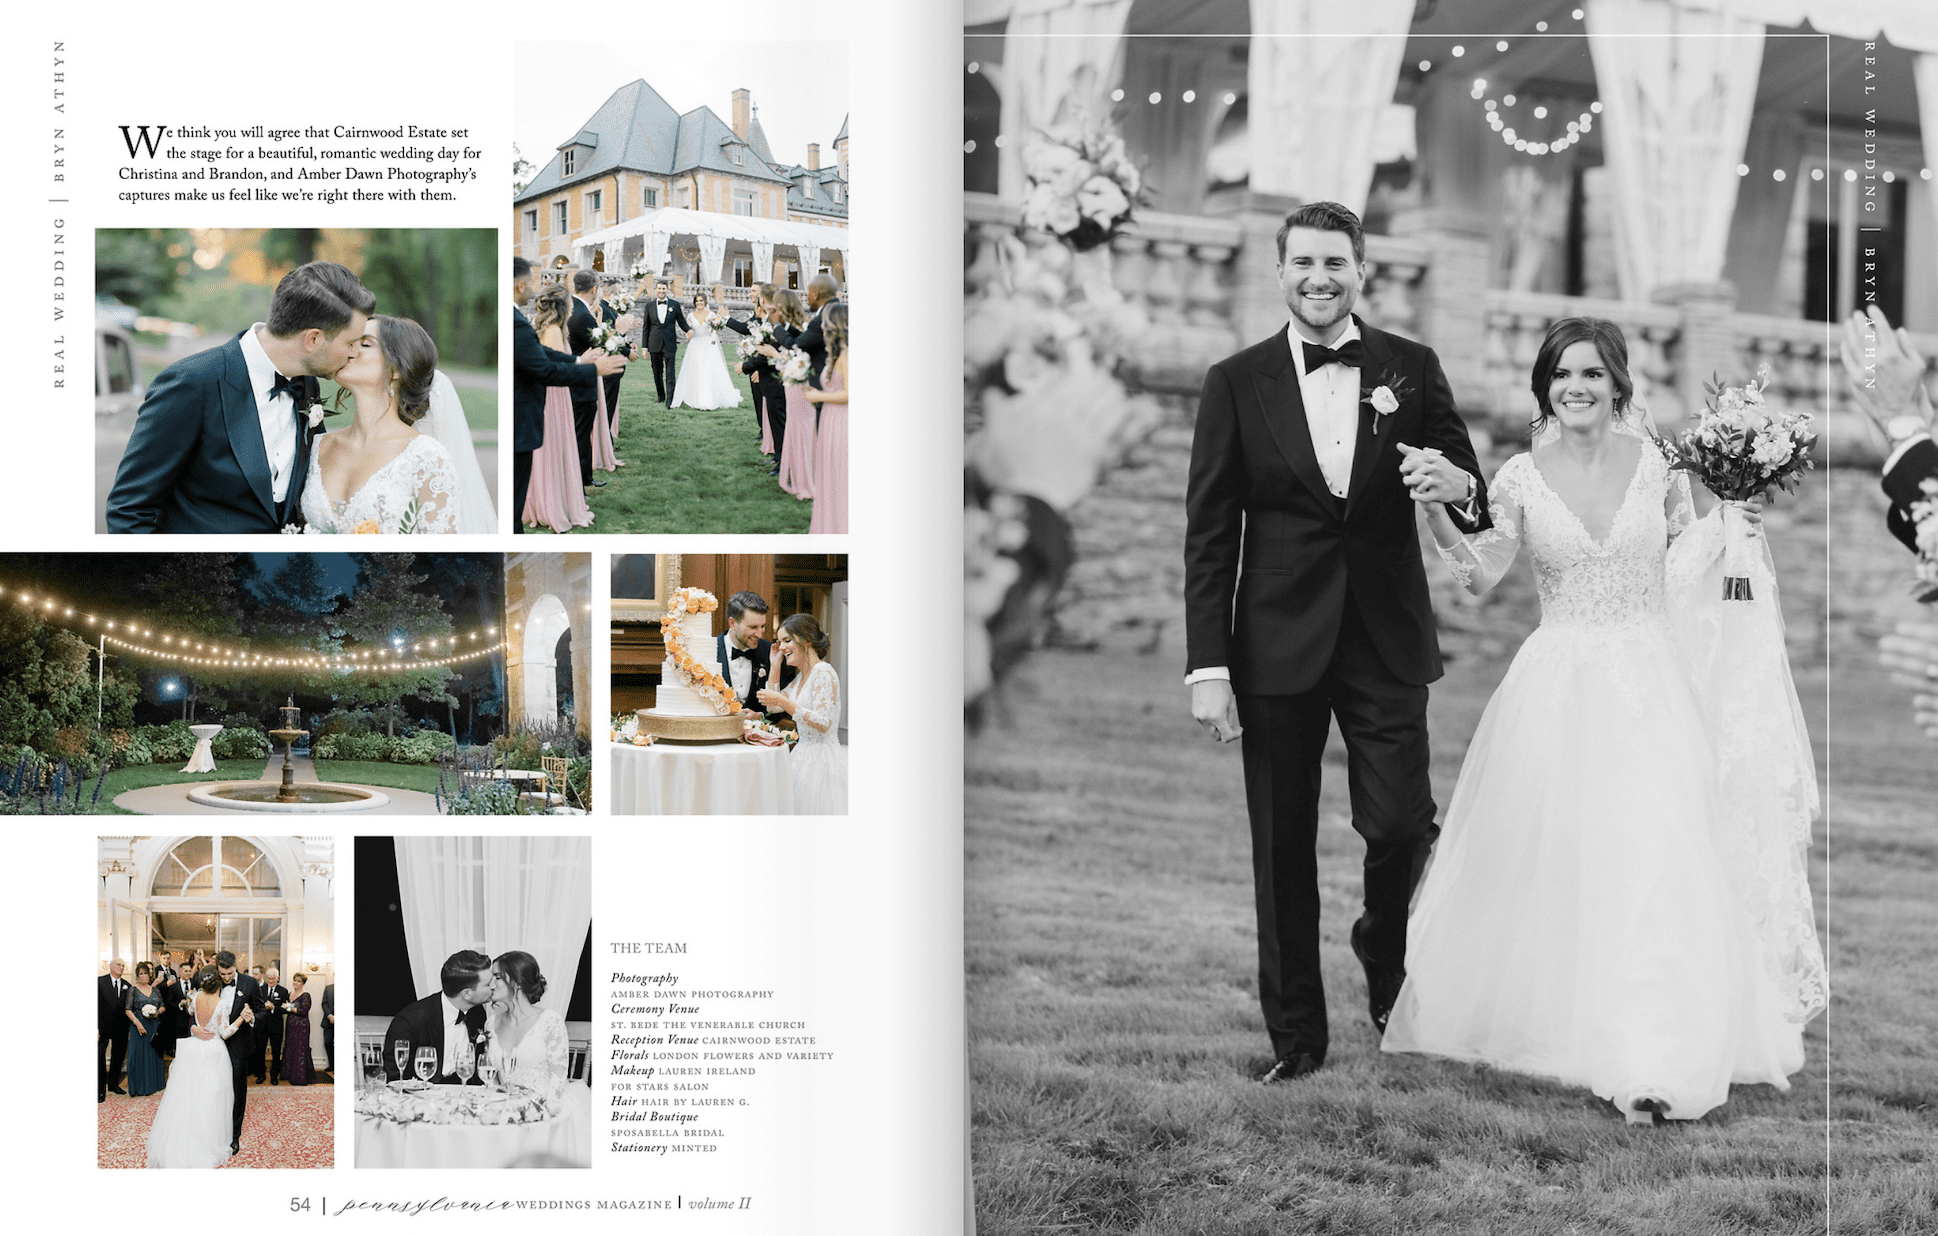 magazine spread of Philadelphia wedding at Cairnwood estate